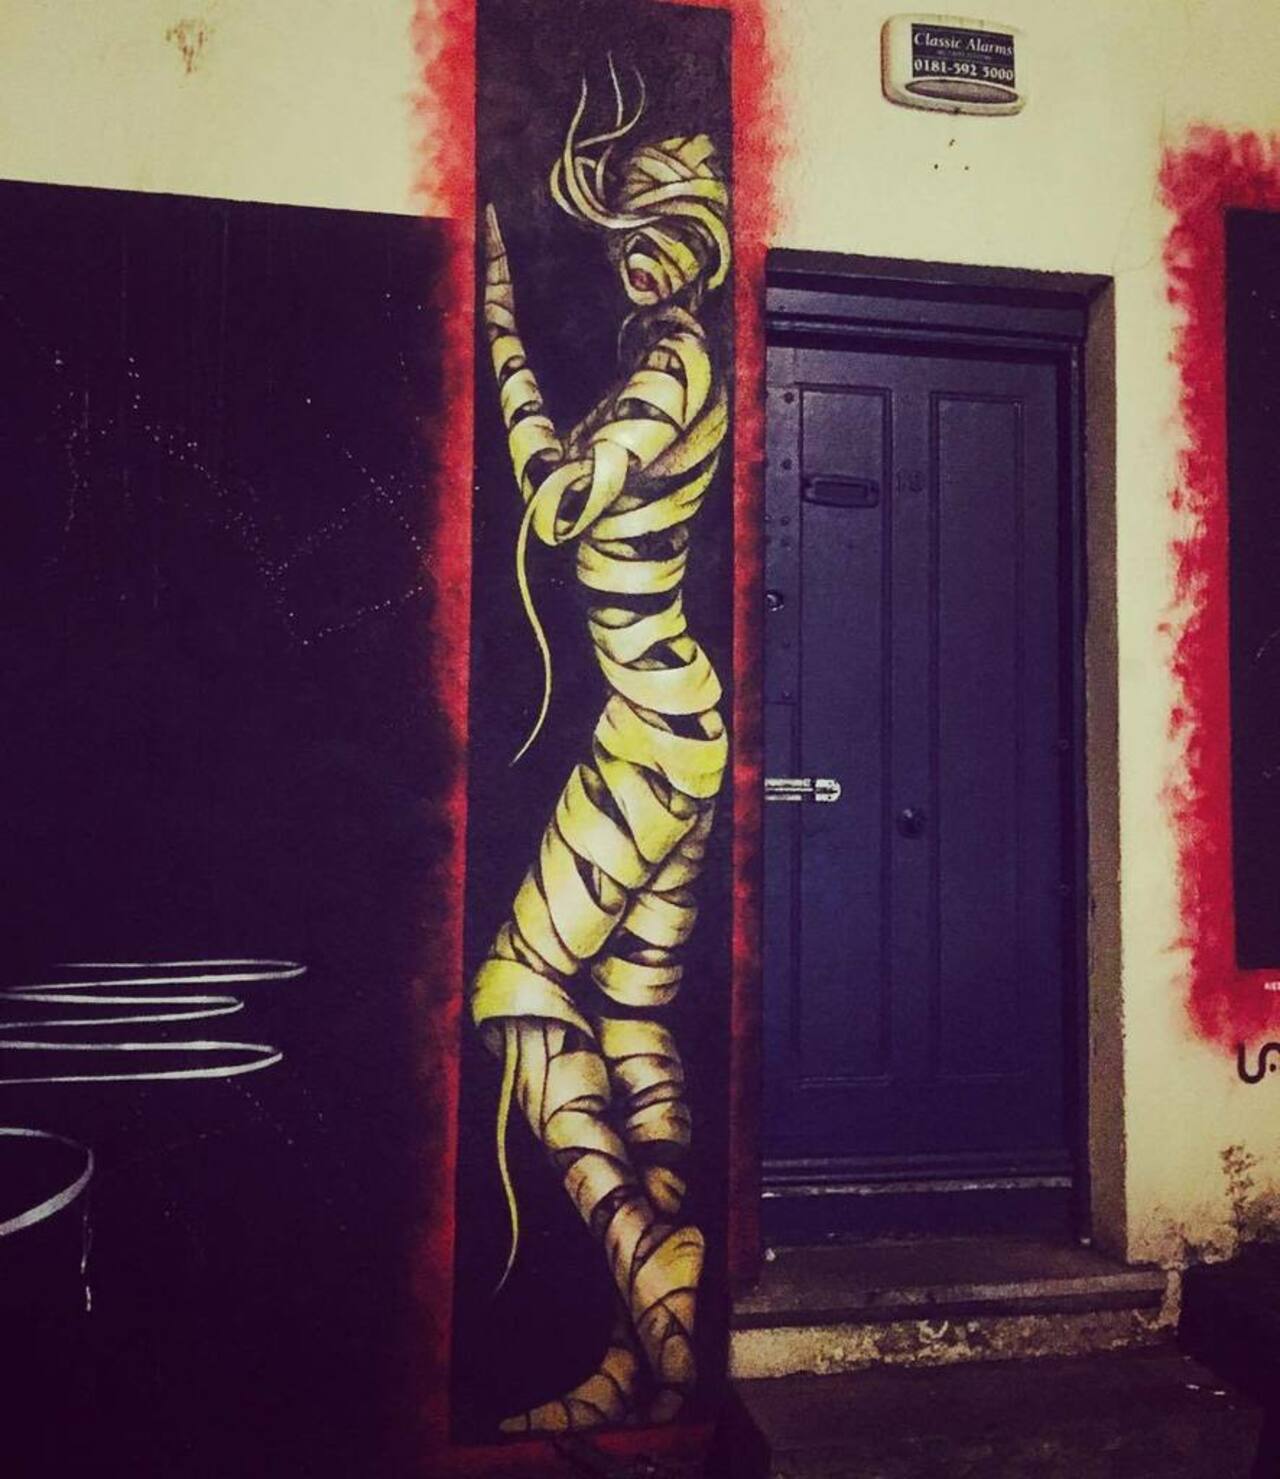  #streetart #streetartlondon  #graffiti #camden #graffitiwall #london #mummy by bambeeize http://t.co/yyrx7TMG1v